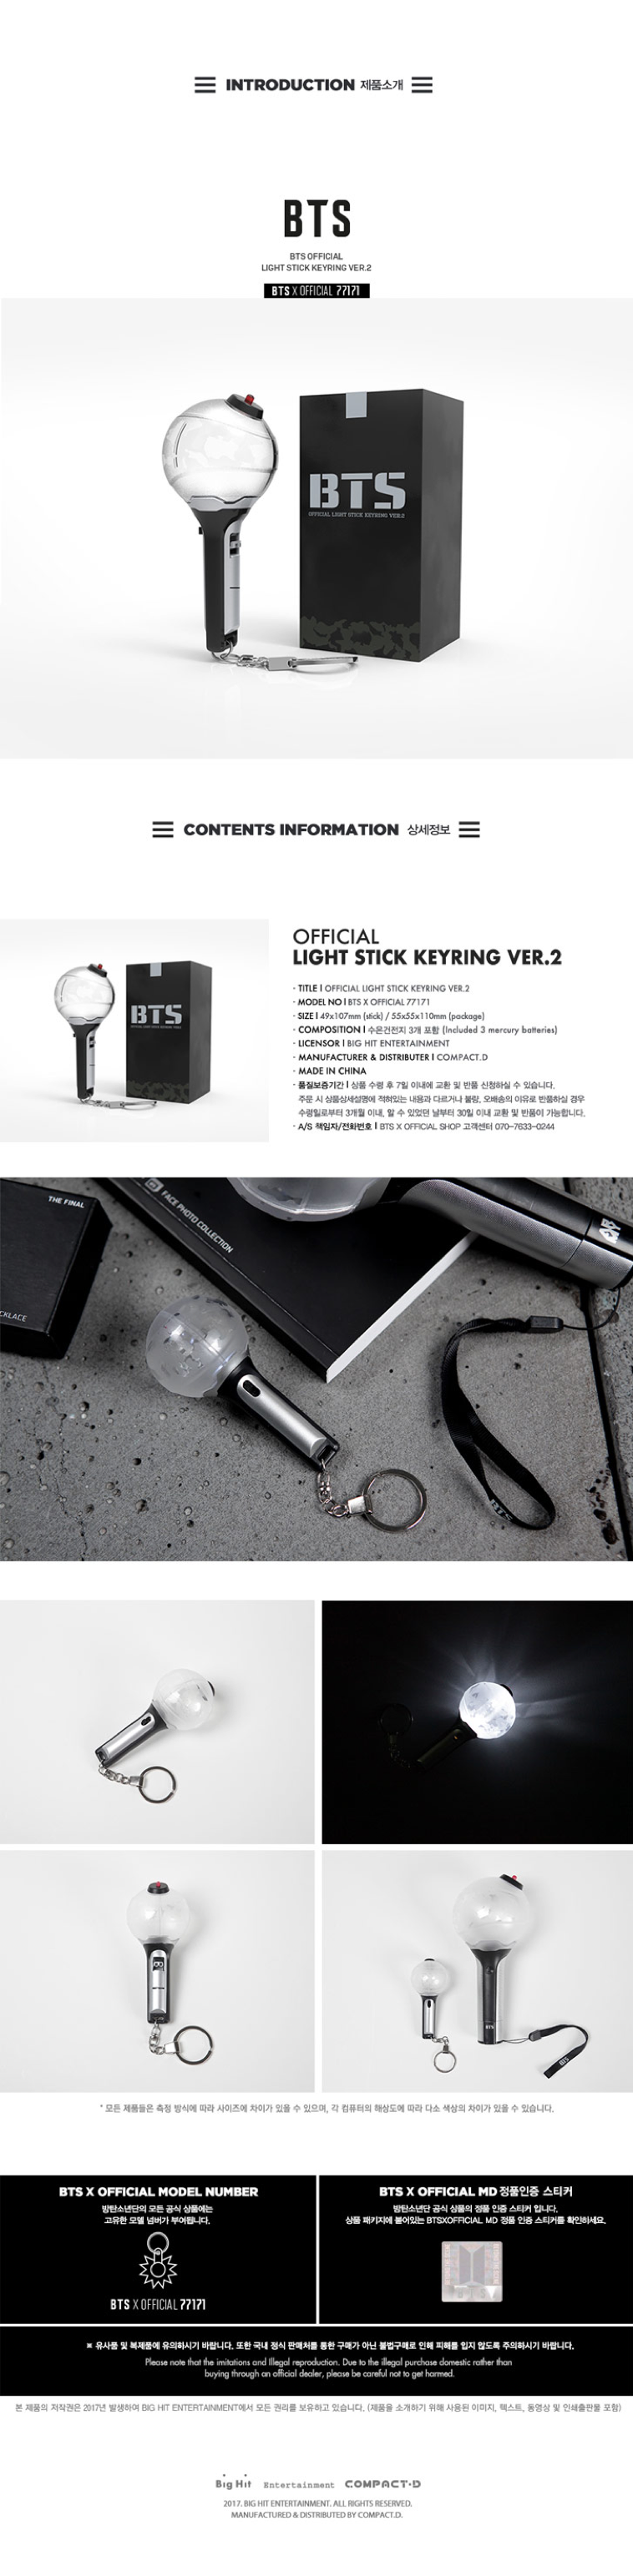 BTS Official Light Stick Keyring Ver.2